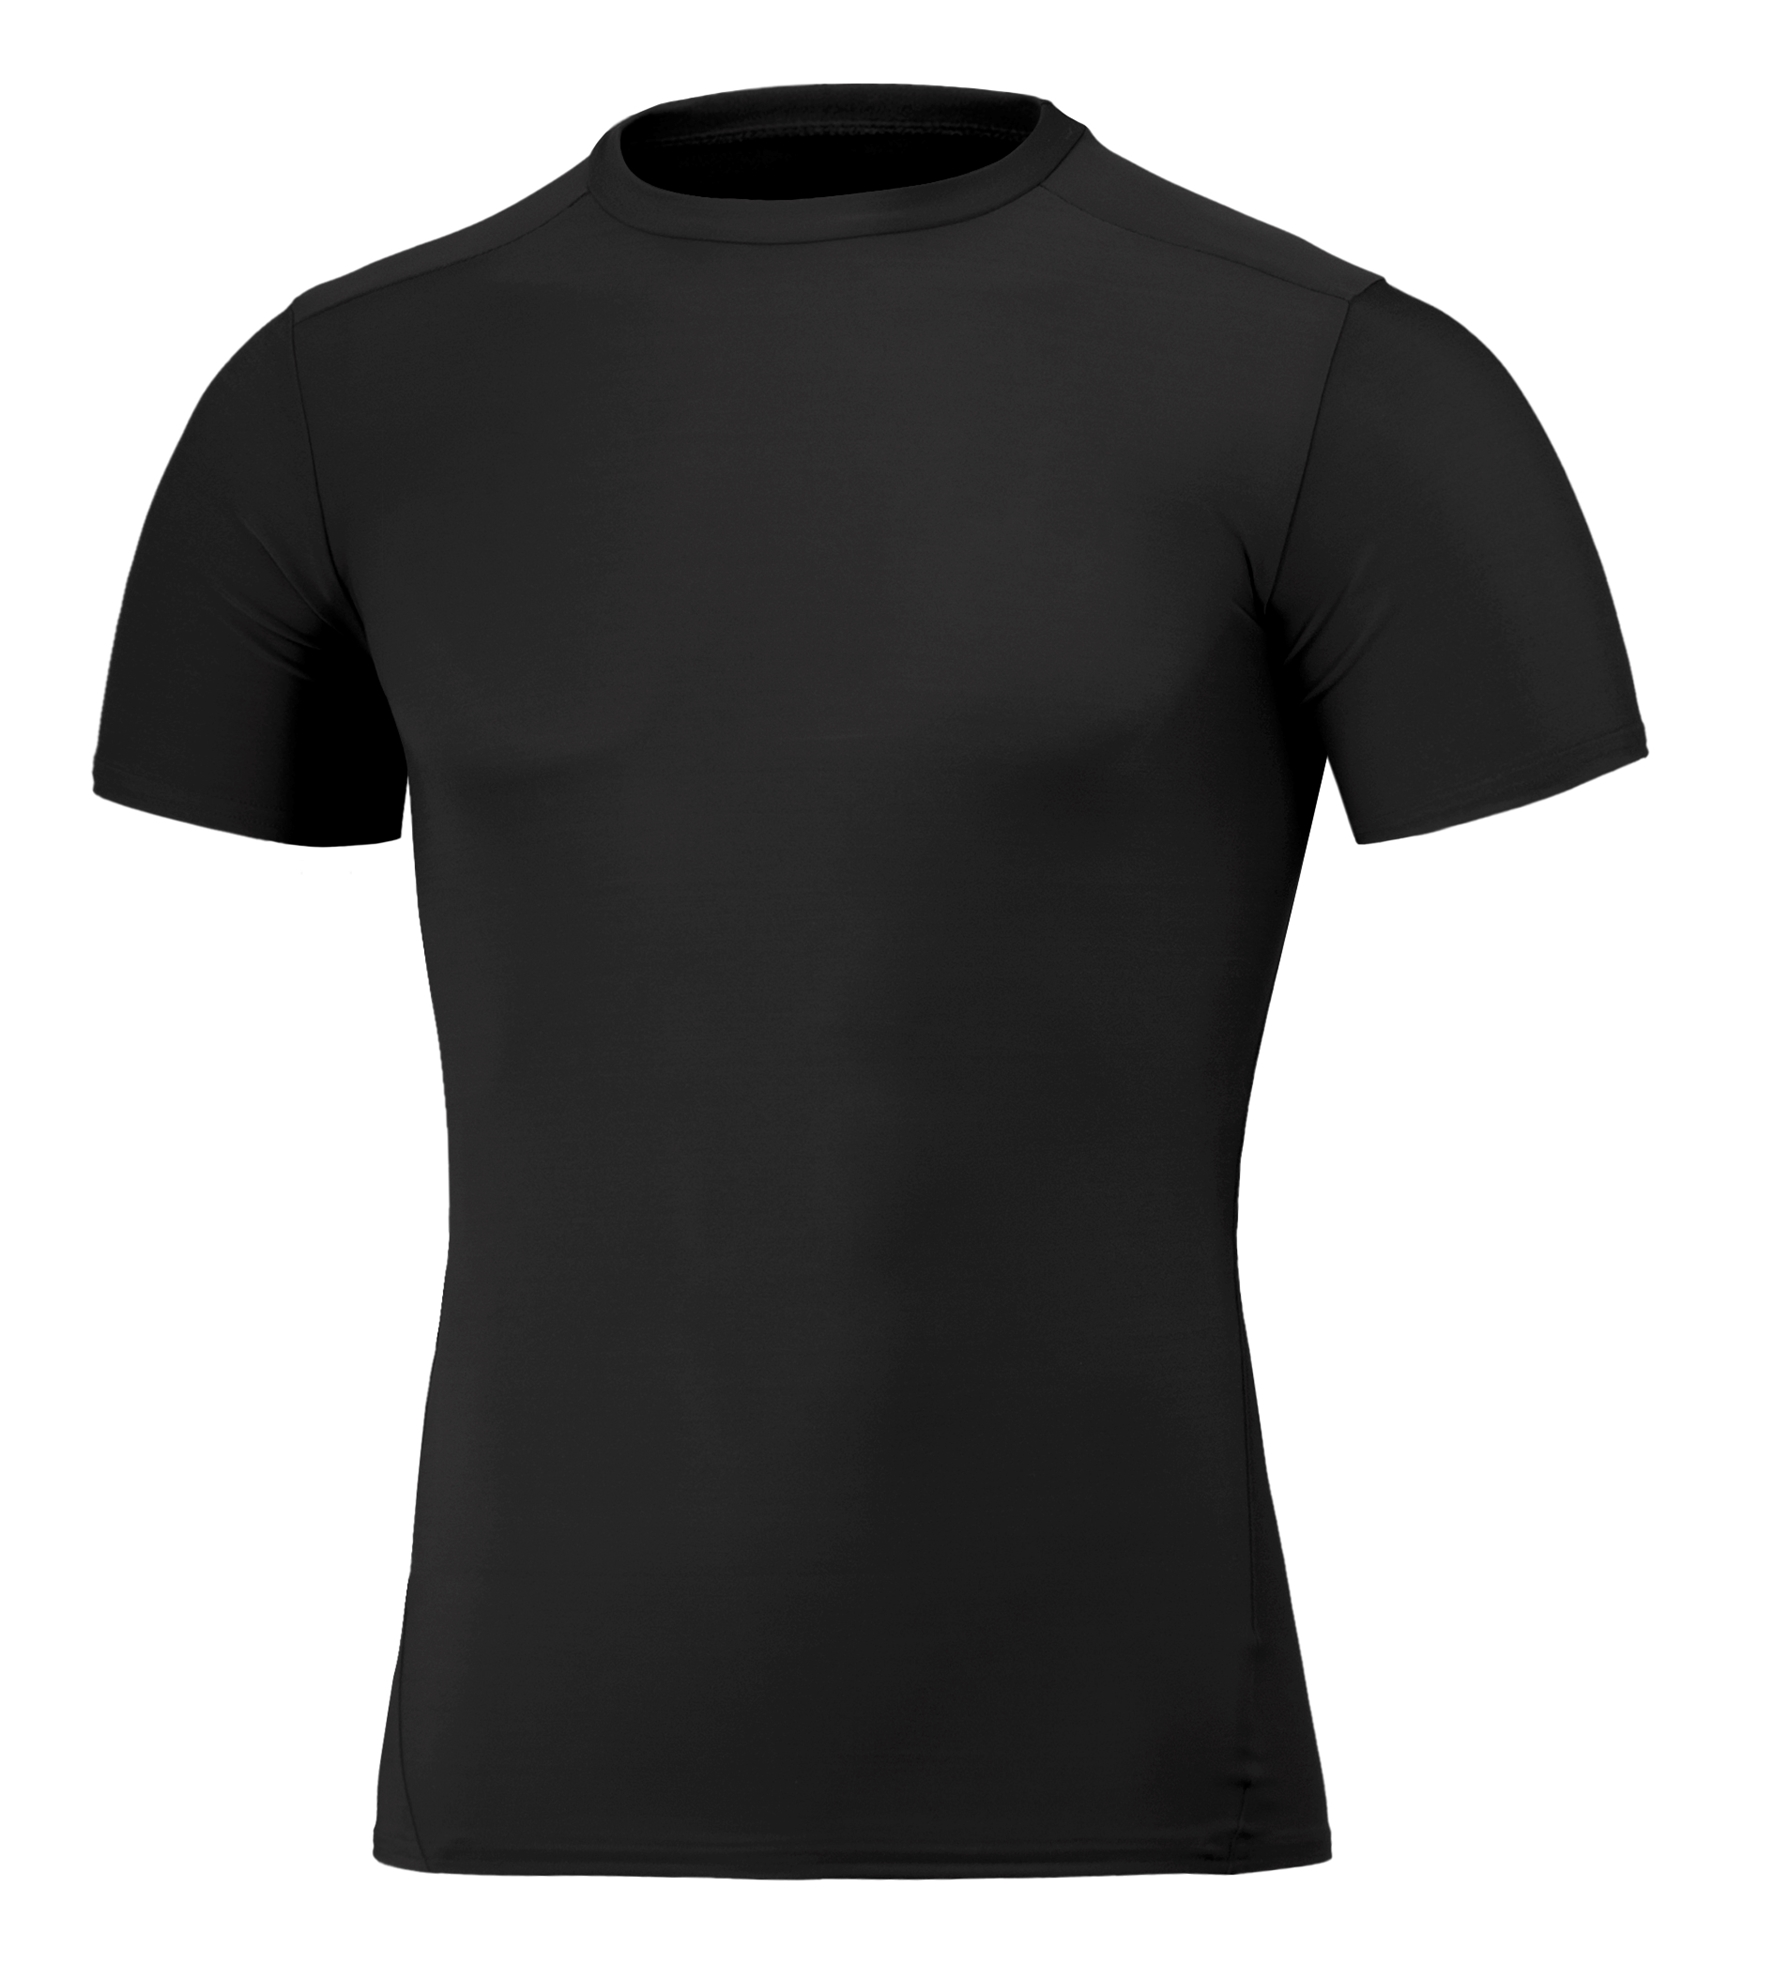 BAW Athletic Wear CT101Y - Youth Compression Short Sleeve T-Shirt